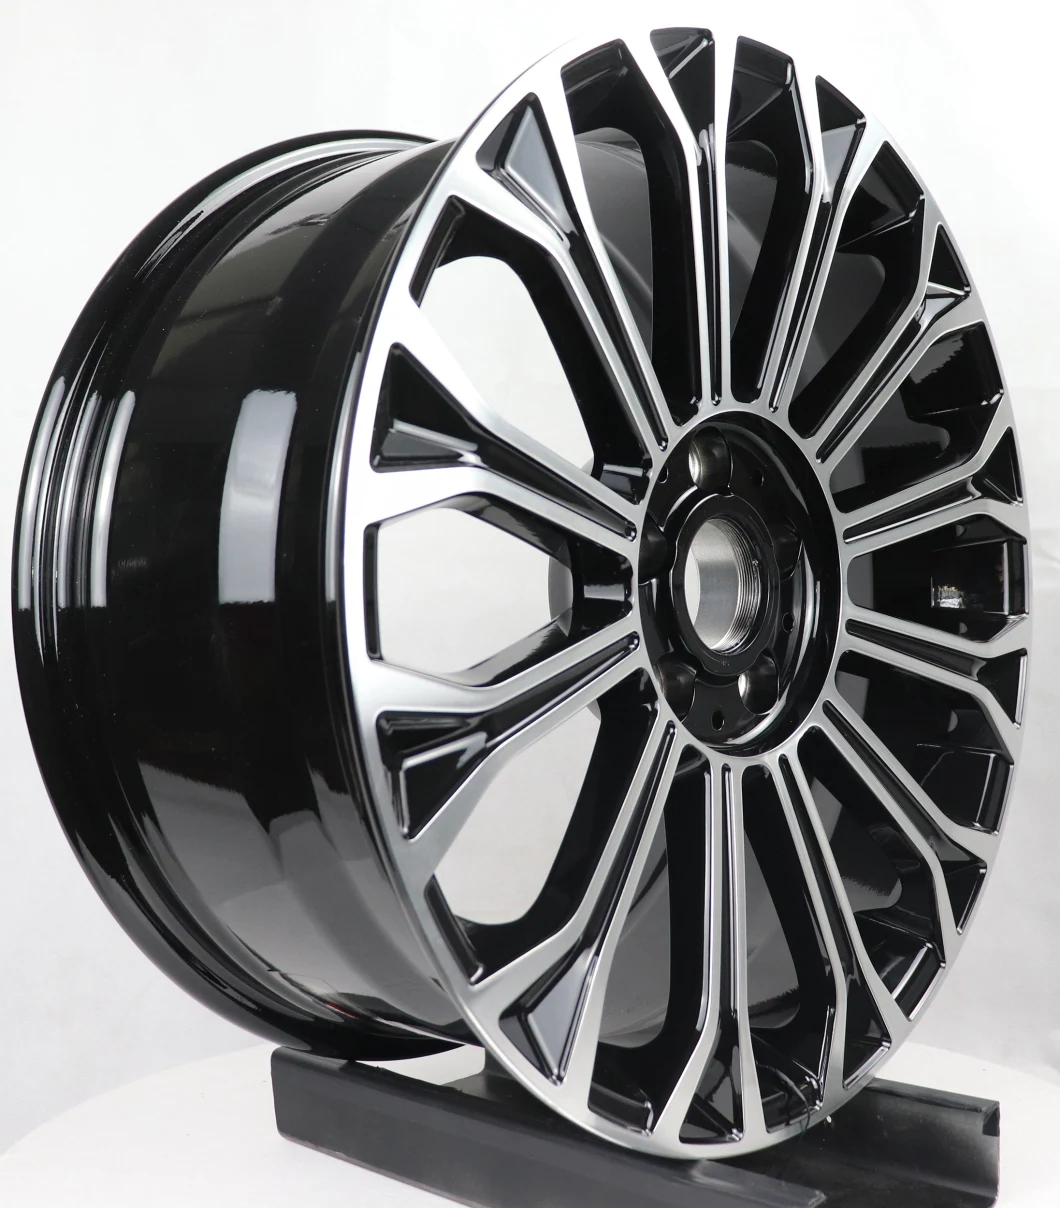 Customization 5X114.3 Racing Passenger Car Wheel Rim/Replica Aluminum Alloy Wheel for BMW